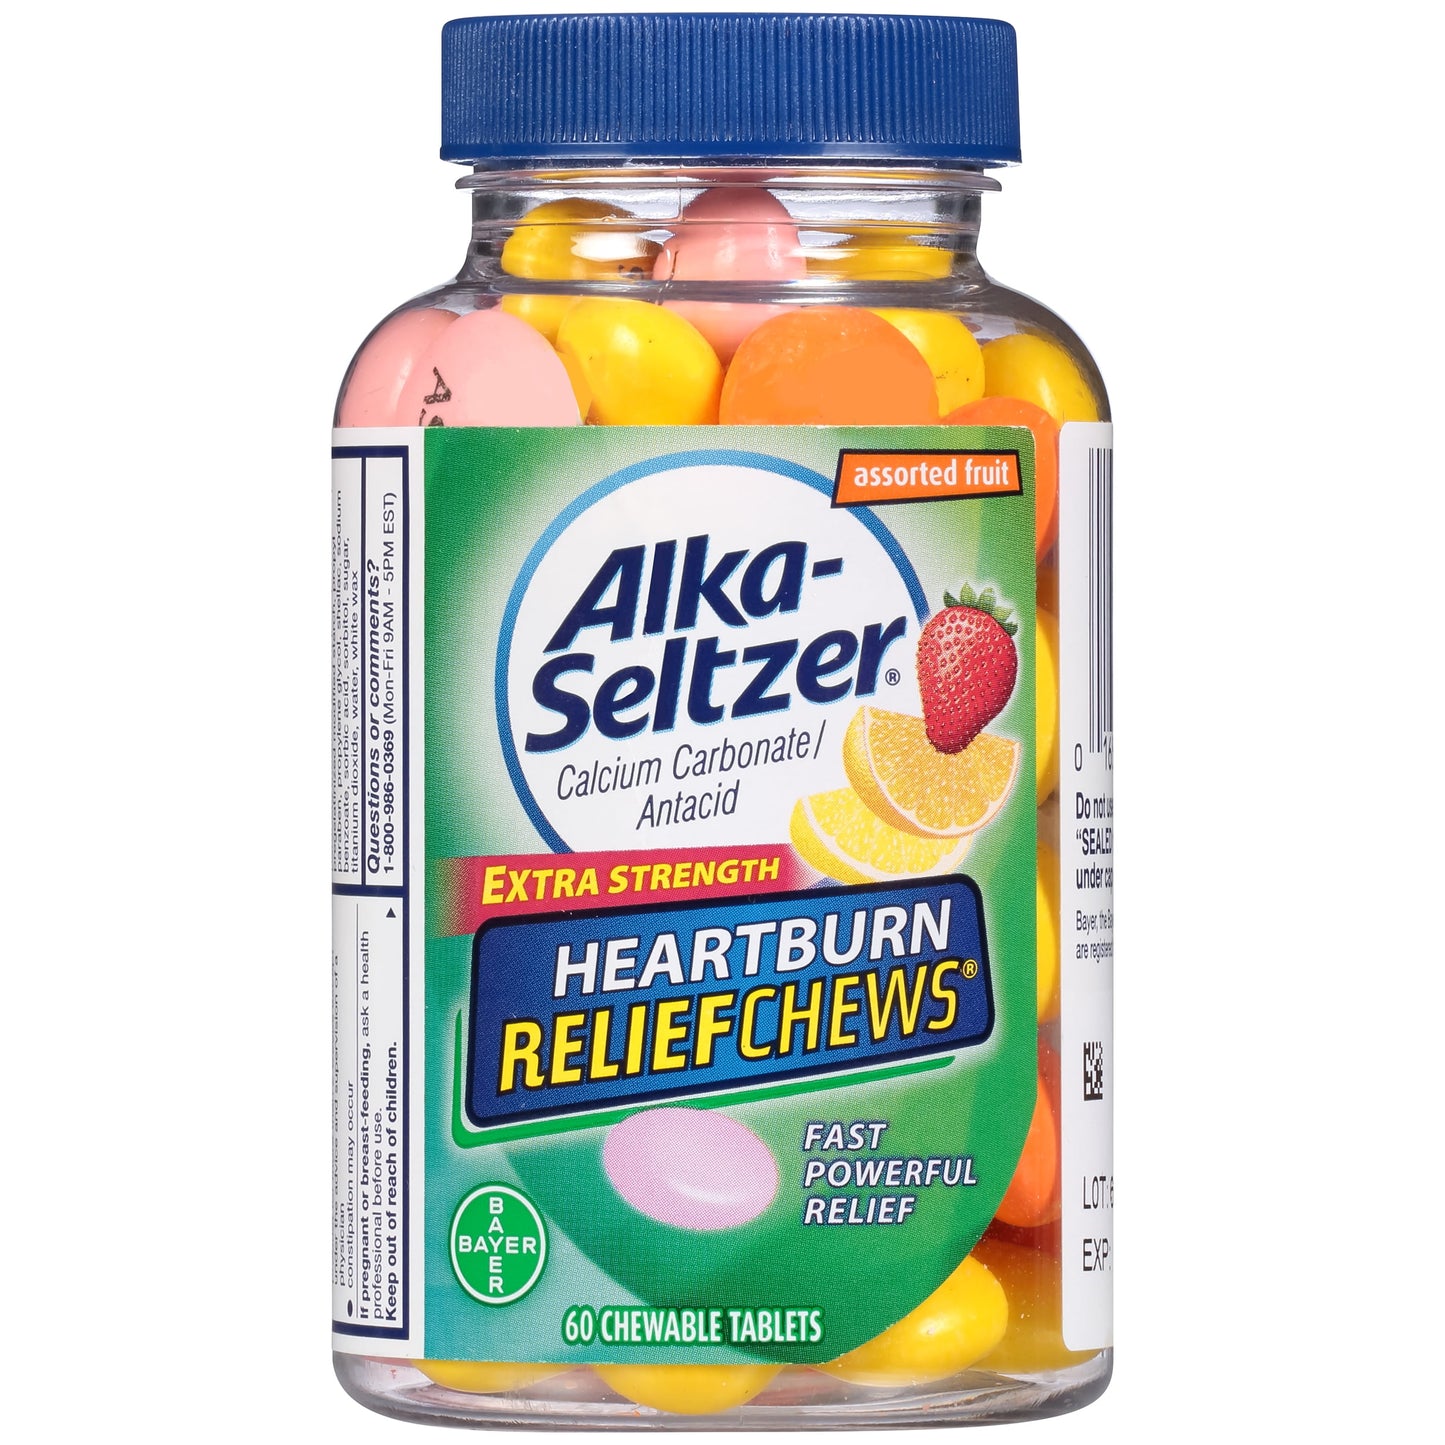 Alka-Seltzer Heartburn Relief Fruit Chews